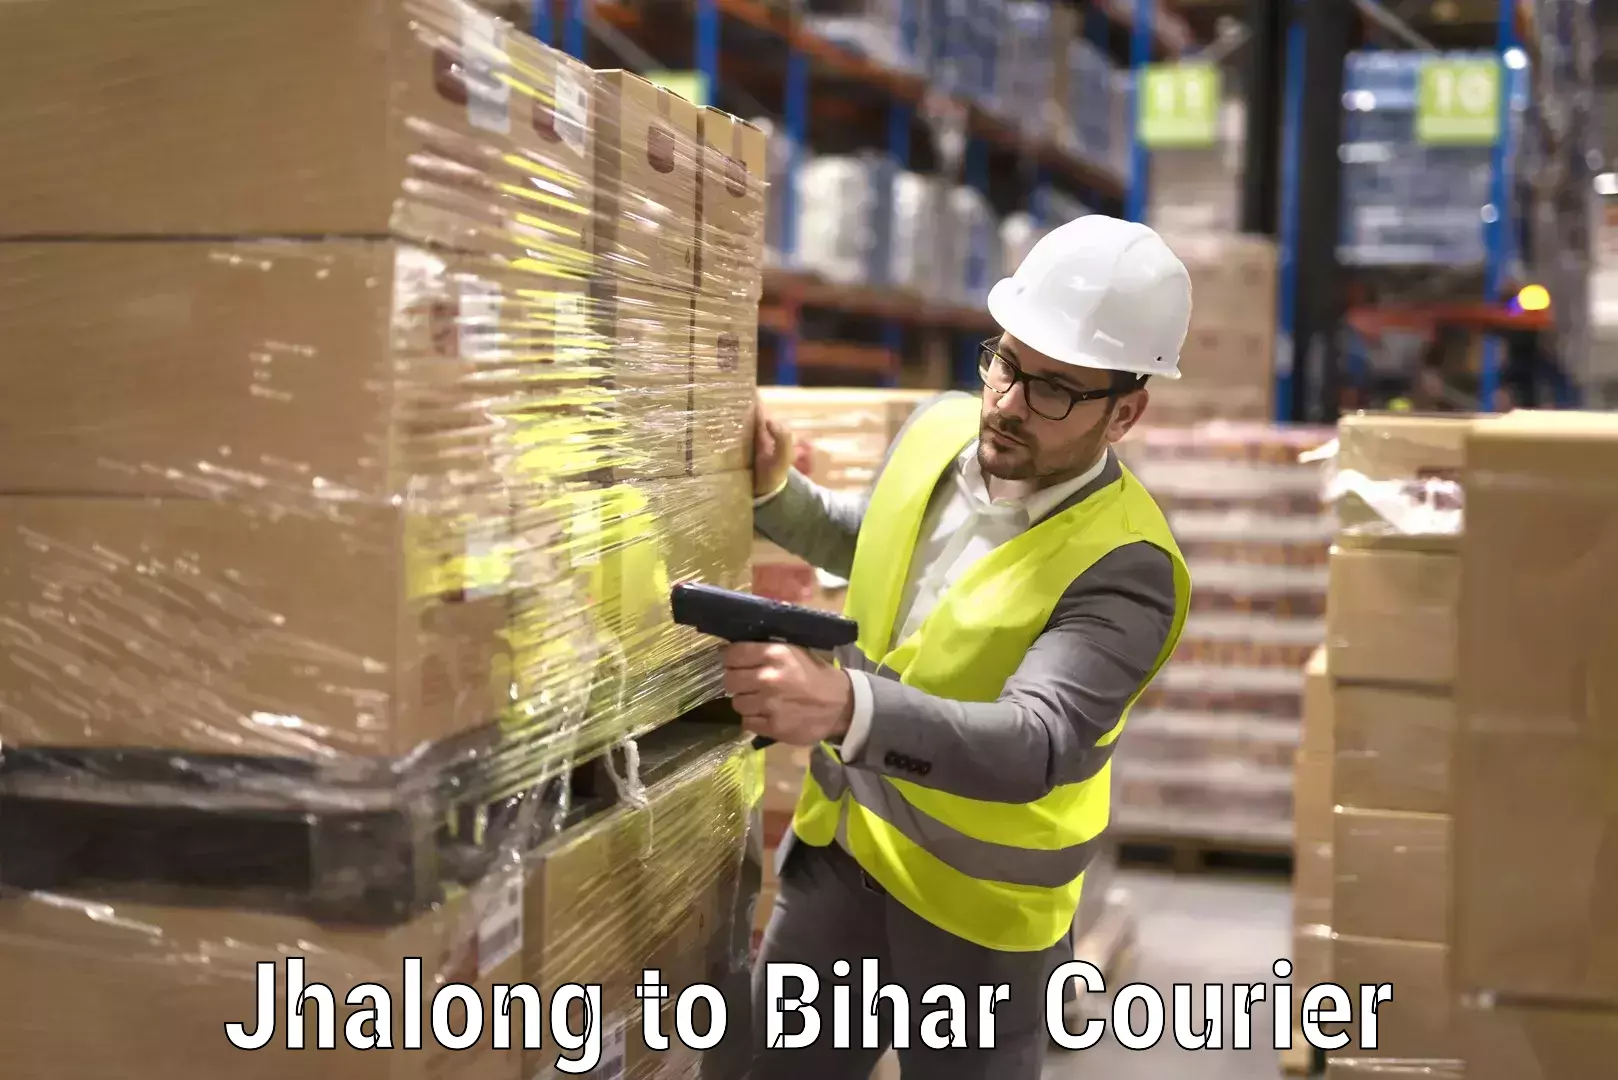 Professional moving company Jhalong to Bihar